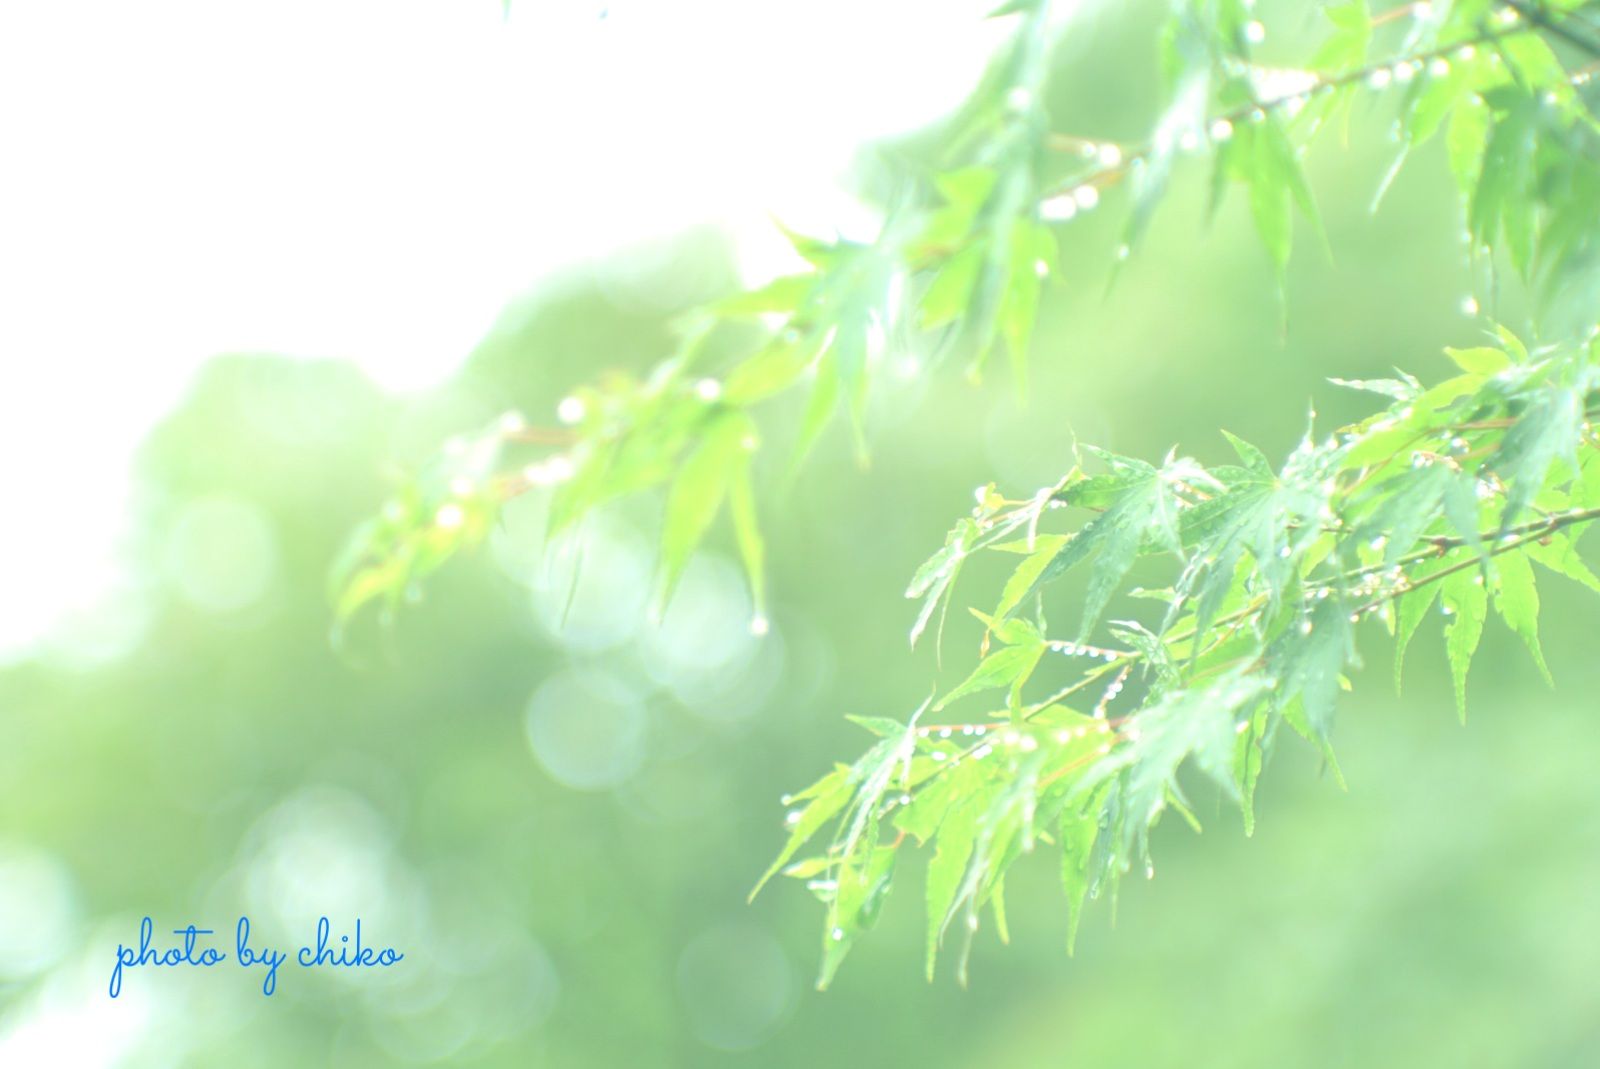 chikoのお写歩ブログ ⋆̩☂︎*̣̩ 梅雨を楽しもう ⋆̩☂︎*̣